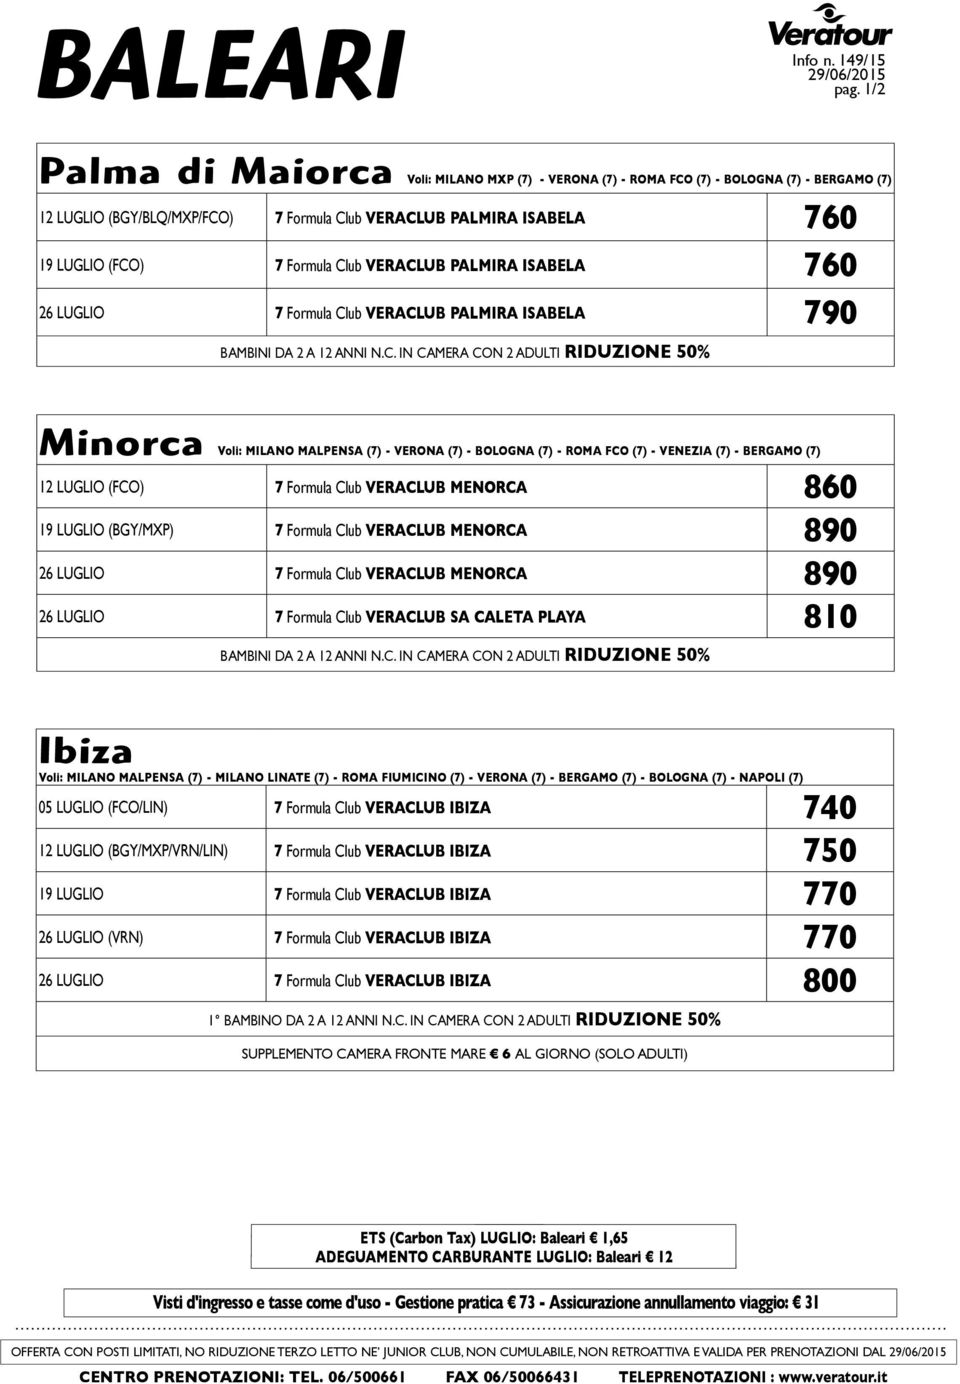 Club VERACLUB PALMIRA ISABELA 760 26 LUGLIO 7 Formula Club VERACLUB PALMIRA ISABELA 790 Minorca Voli: MILANO MALPENSA (7) - VERONA (7) - BOLOGNA (7) - ROMA FCO (7) - VENEZIA (7) - BERGAMO (7) 12